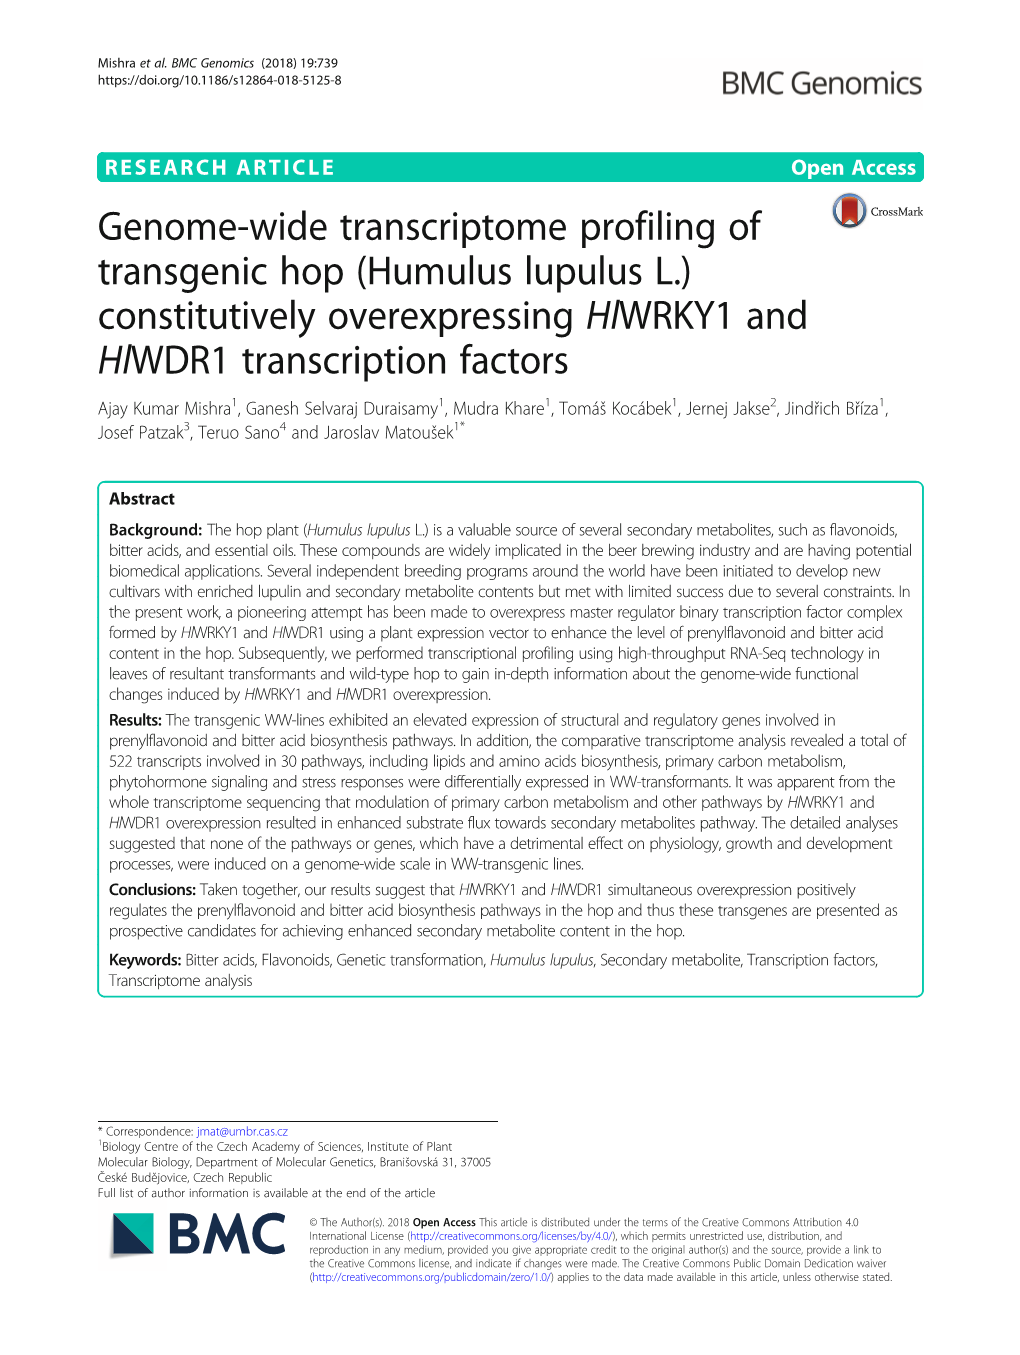 Genome-Wide Transcriptome Profiling of Transgenic Hop (Humulus Lupulus